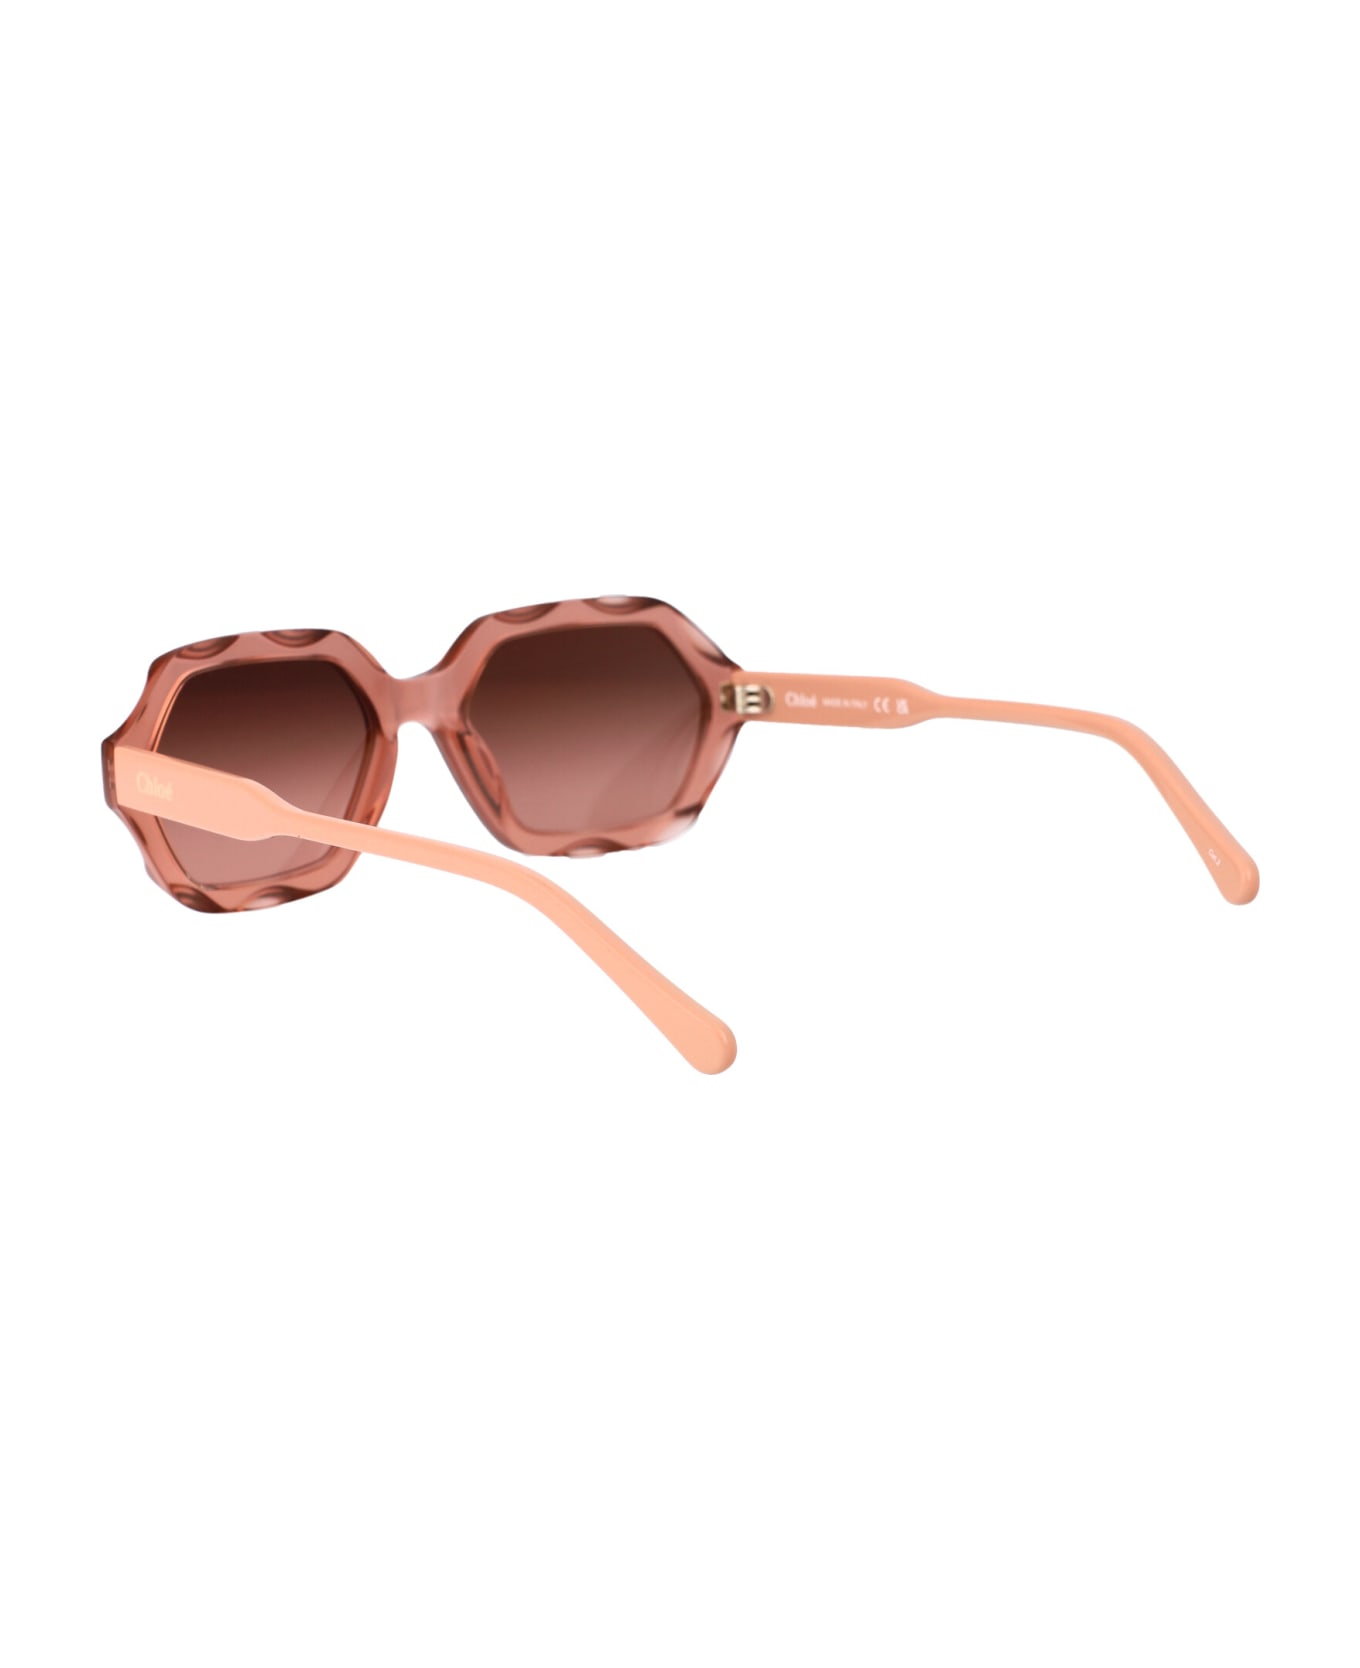 Chloé Eyewear Ch0227s Sunglasses - 003 BROWN PINK COPPER